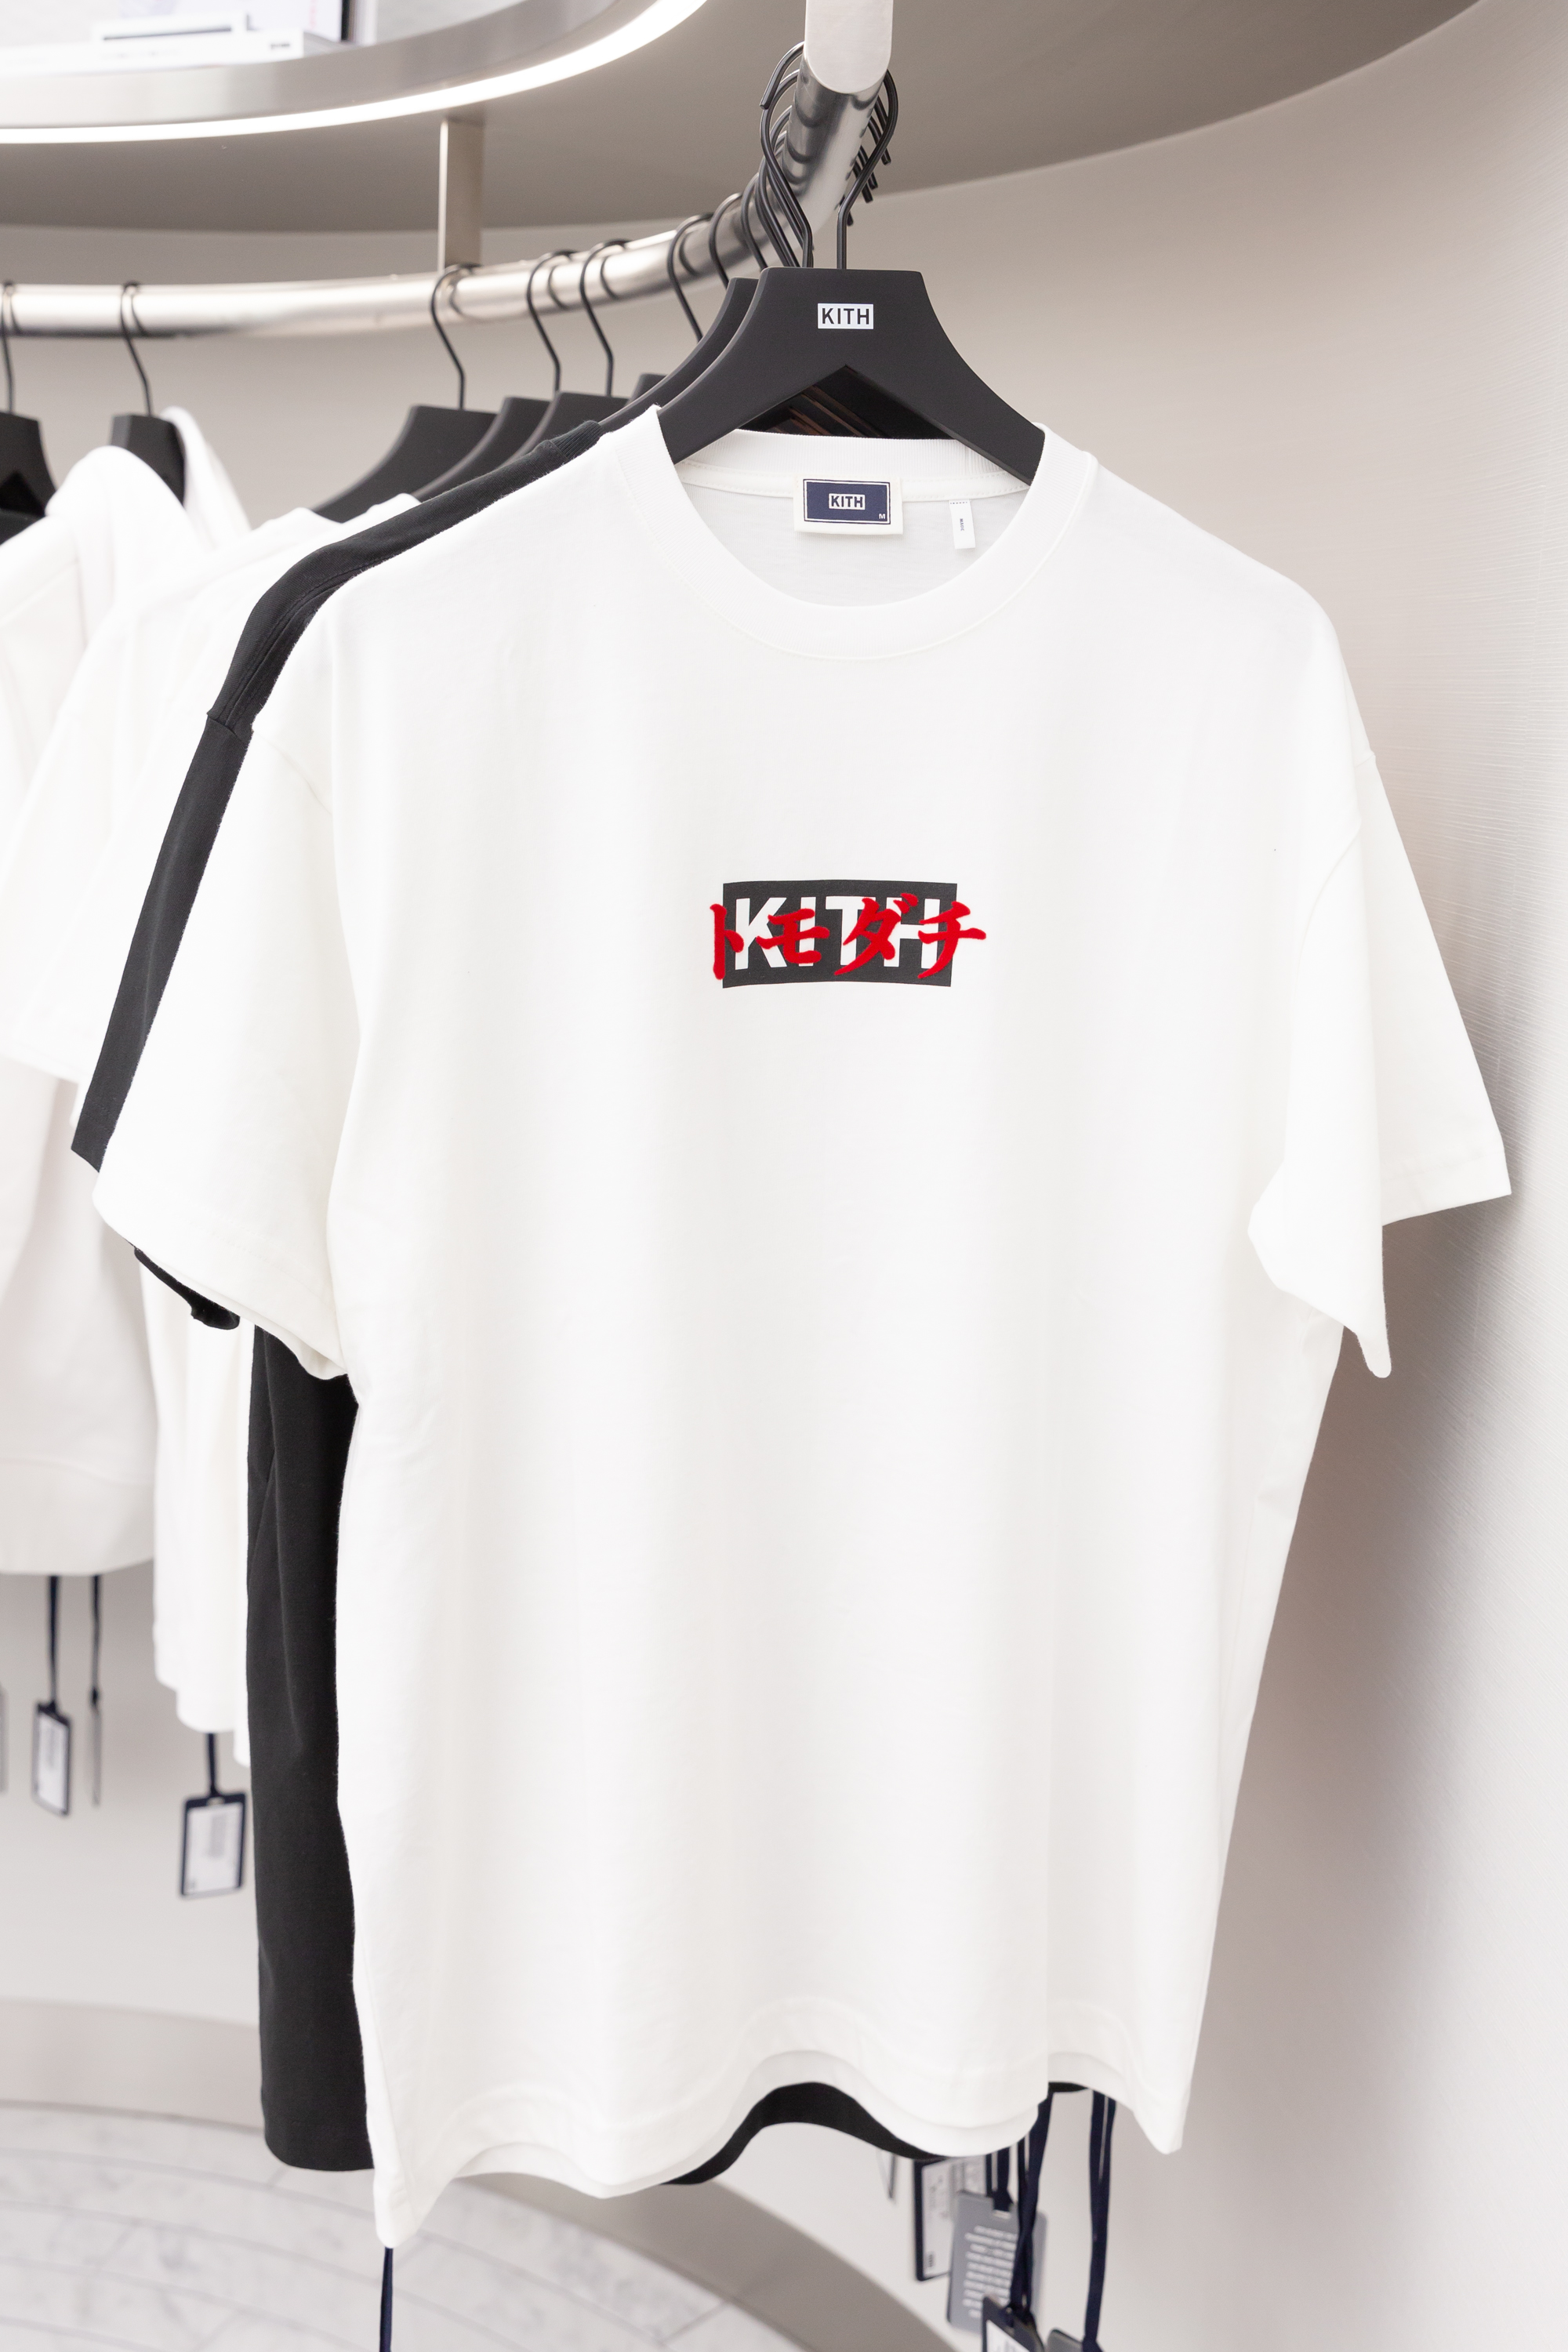 Web kith tokyo限定 東京タワー Tシャツ 白 Mサイズ | www.artfive.co.jp